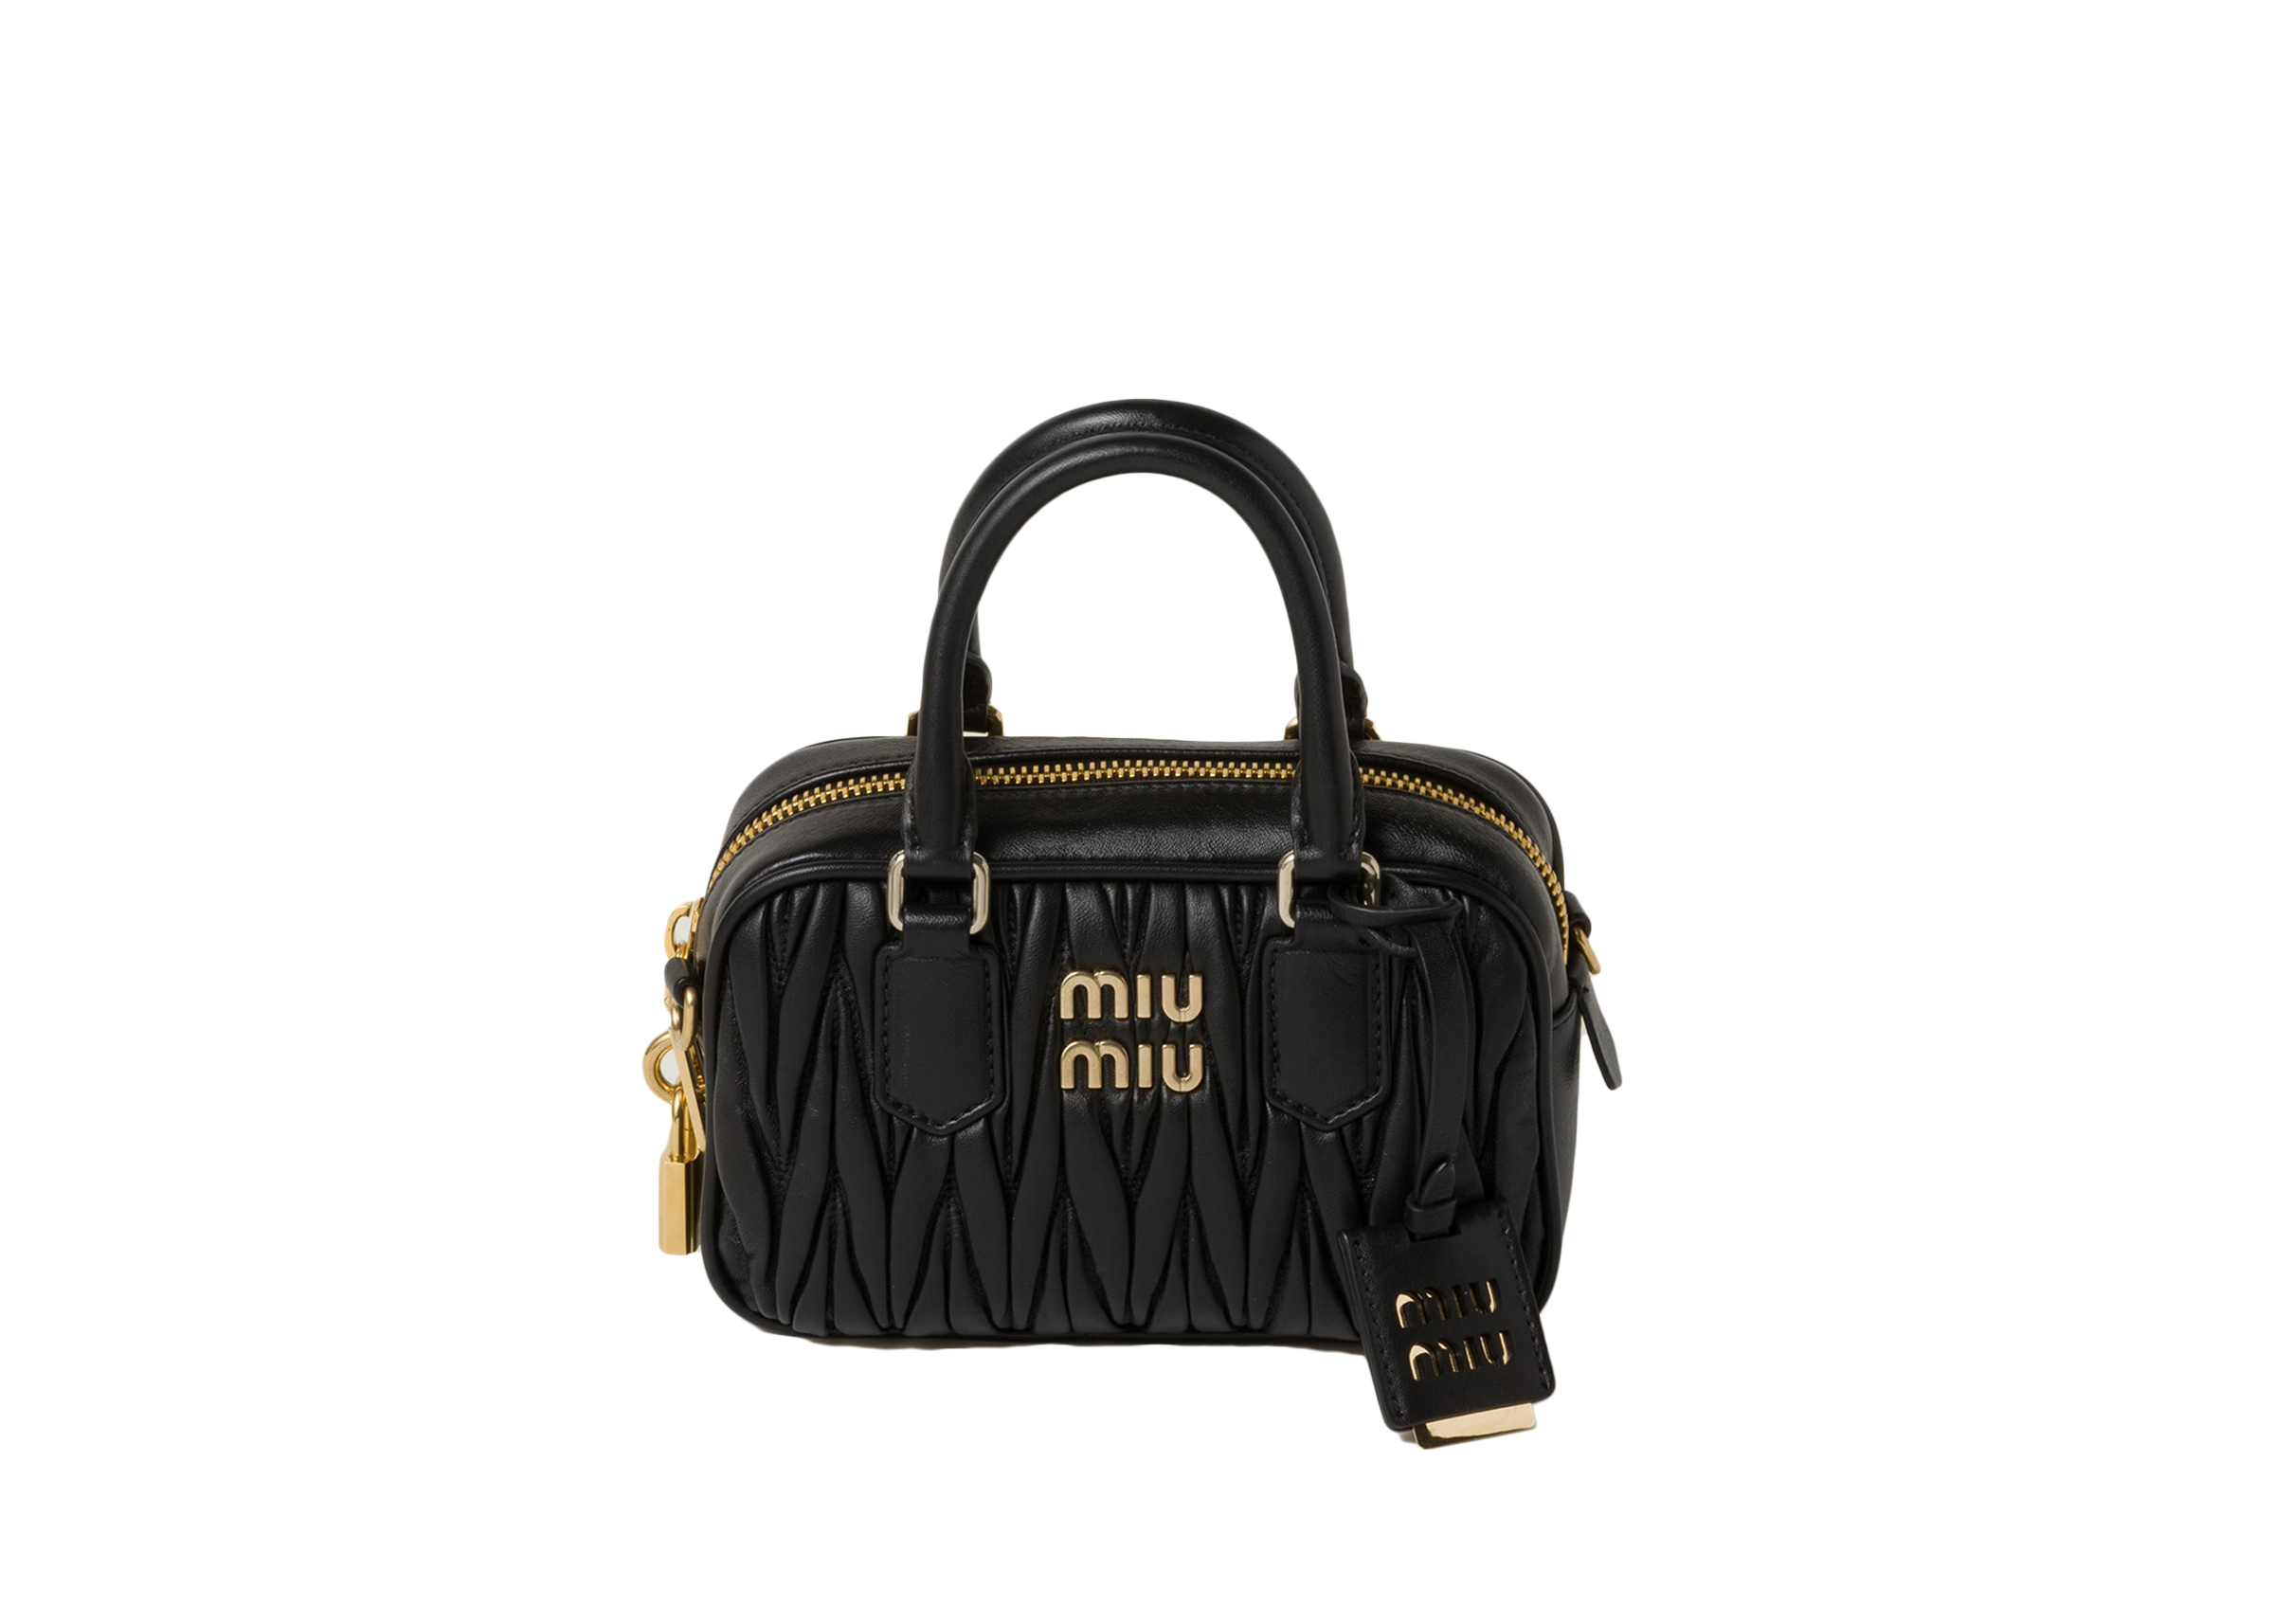 Miu Miu Bags & Suitcases SALE • Up to 50% discount